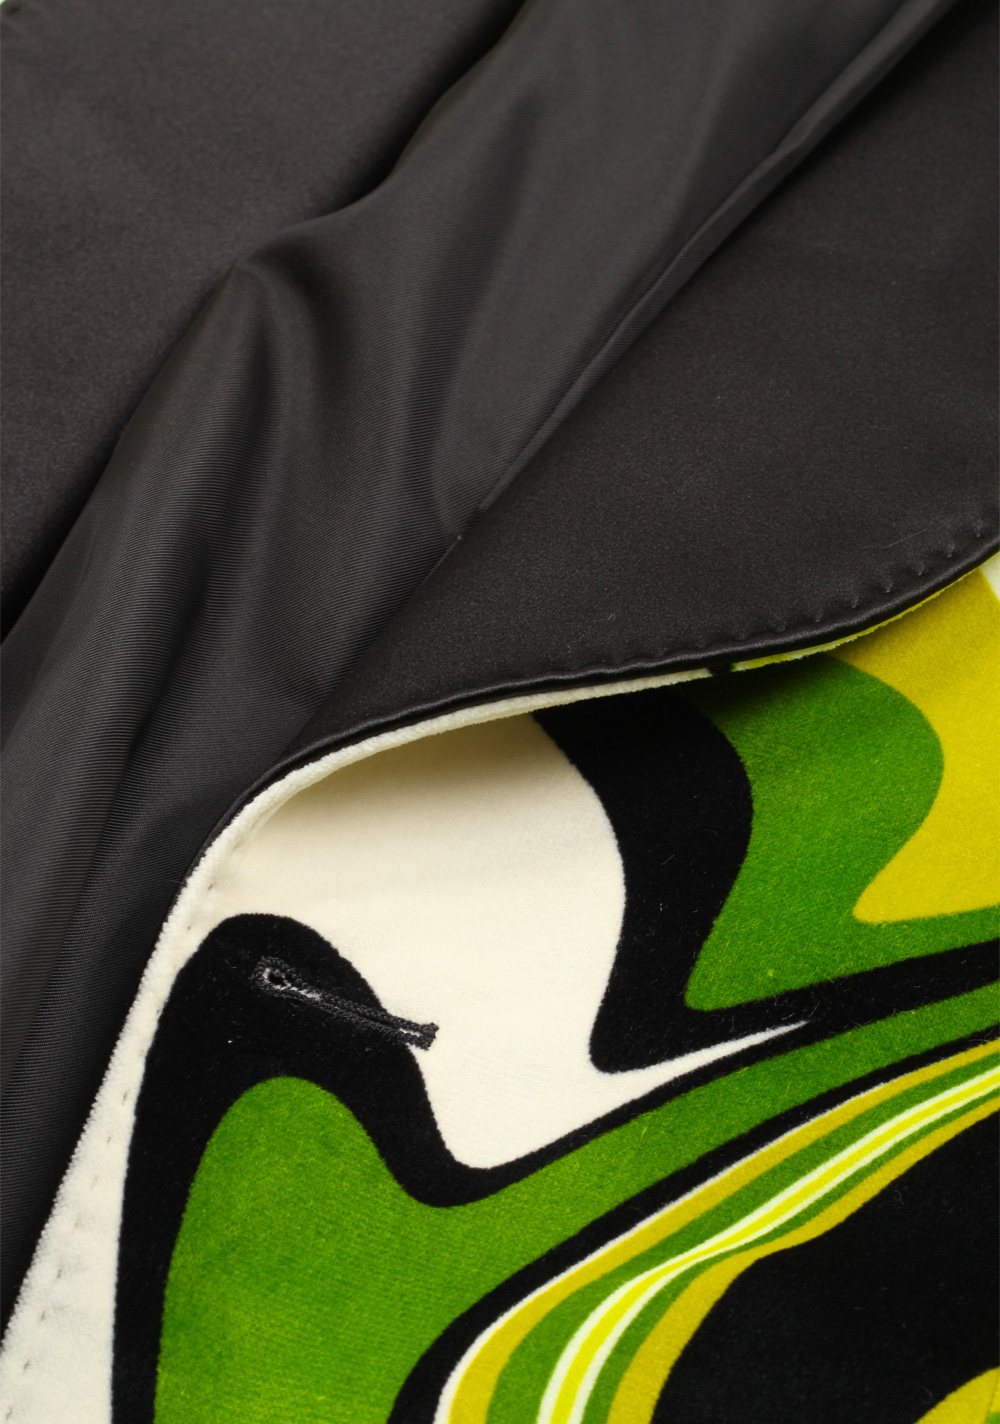 TOM FORD Shelton Green Shawl Collar Sport Coat Tuxedo Dinner Jacket Size 48 / 38R U.S. | Costume Limité